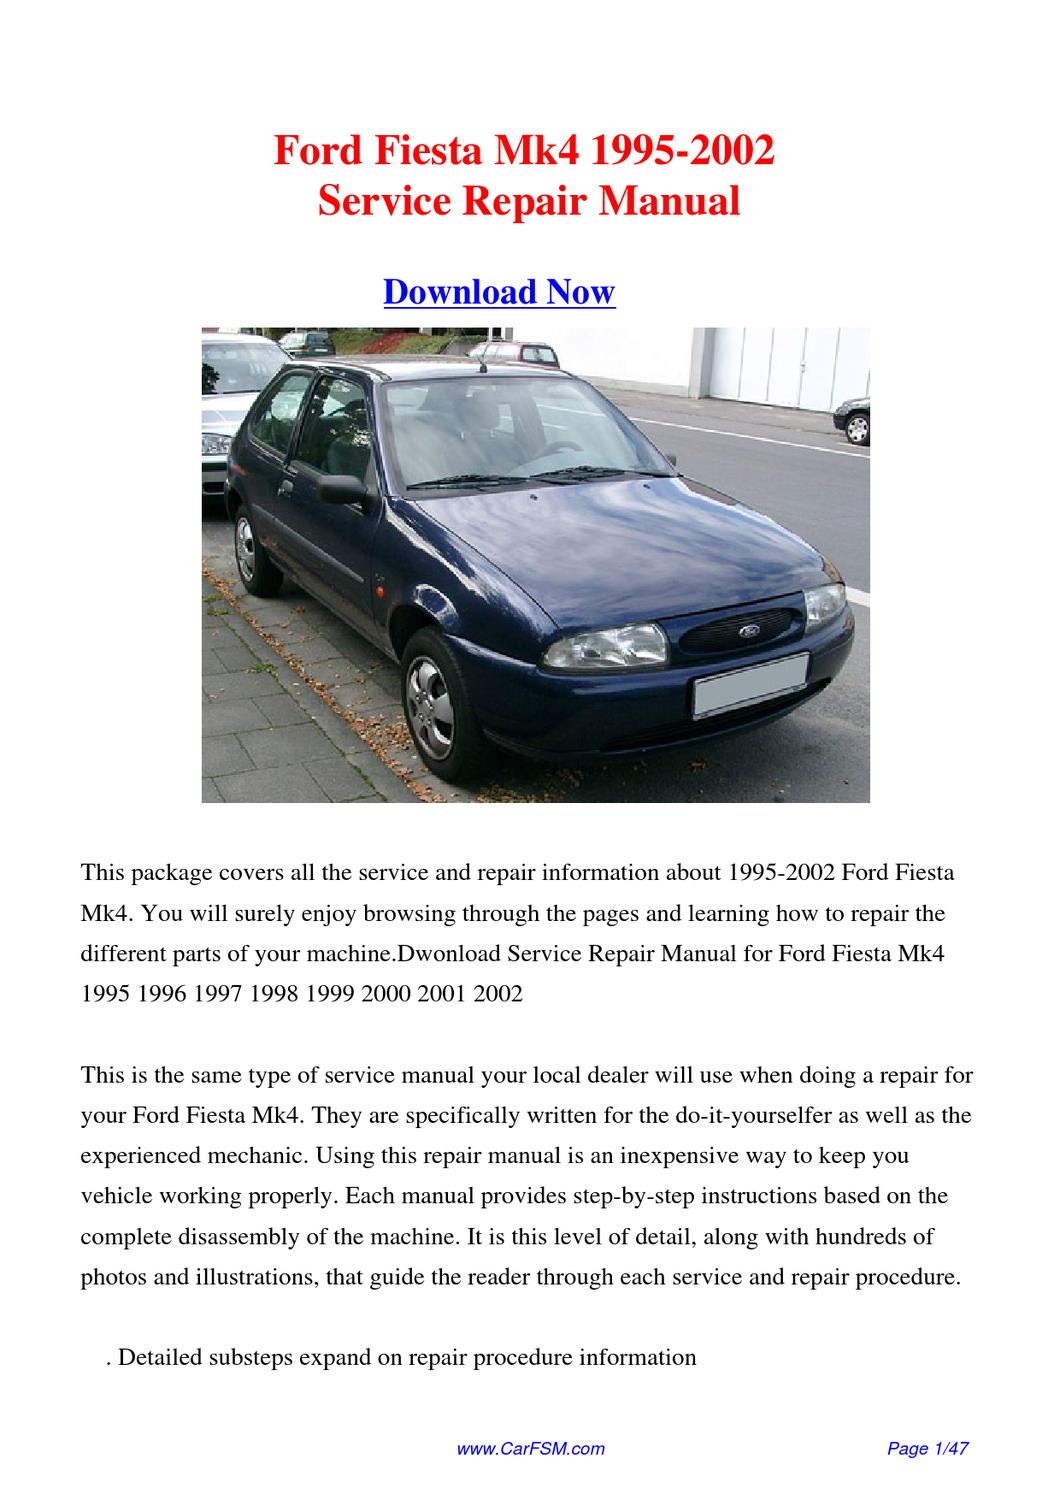 Ford Fiesta Mk4 Manual Download